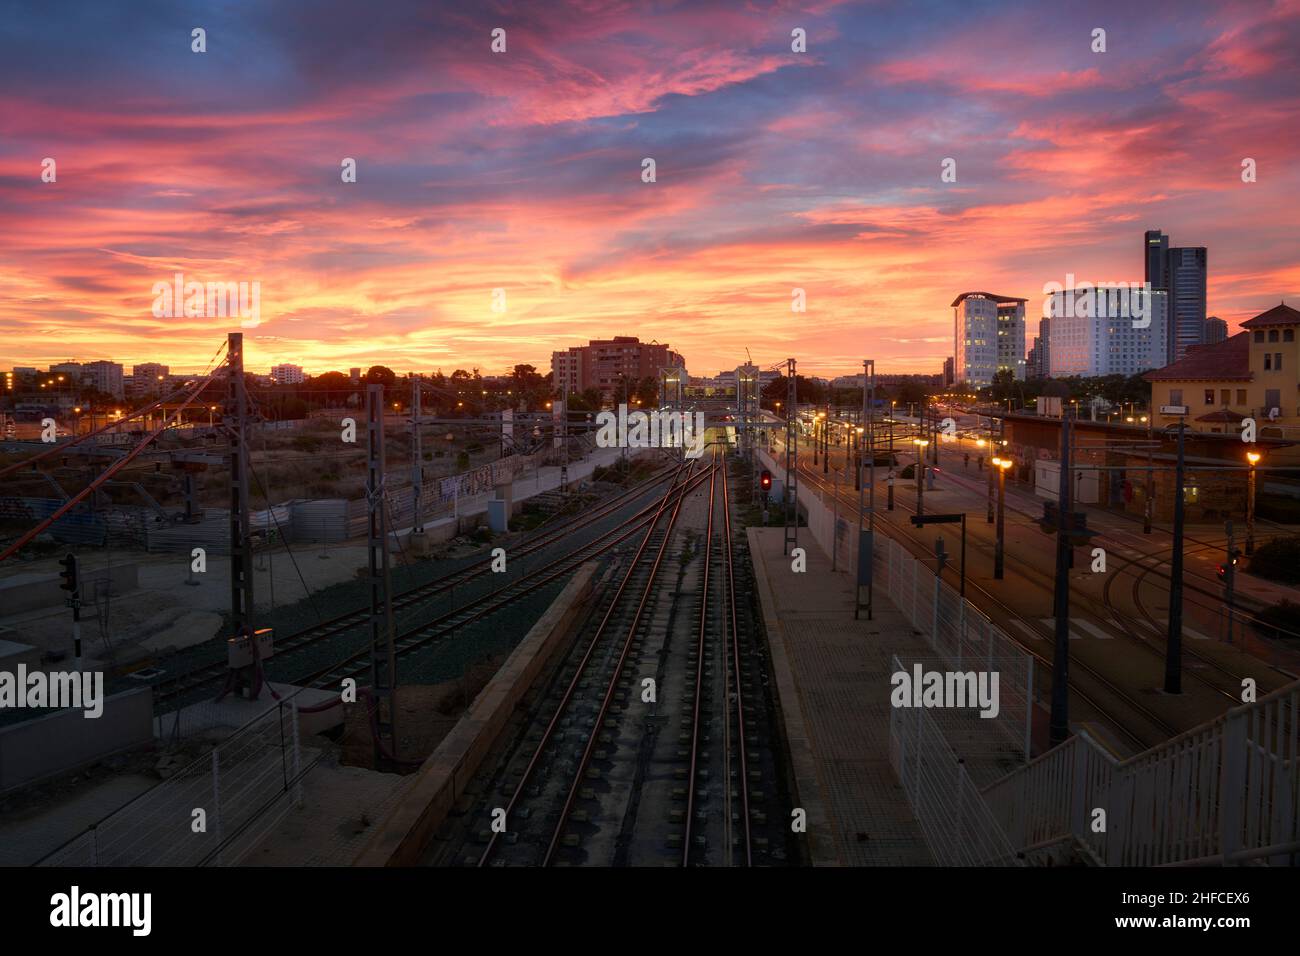 Empalme station at sunrise (Valencia - Spain) Stock Photo